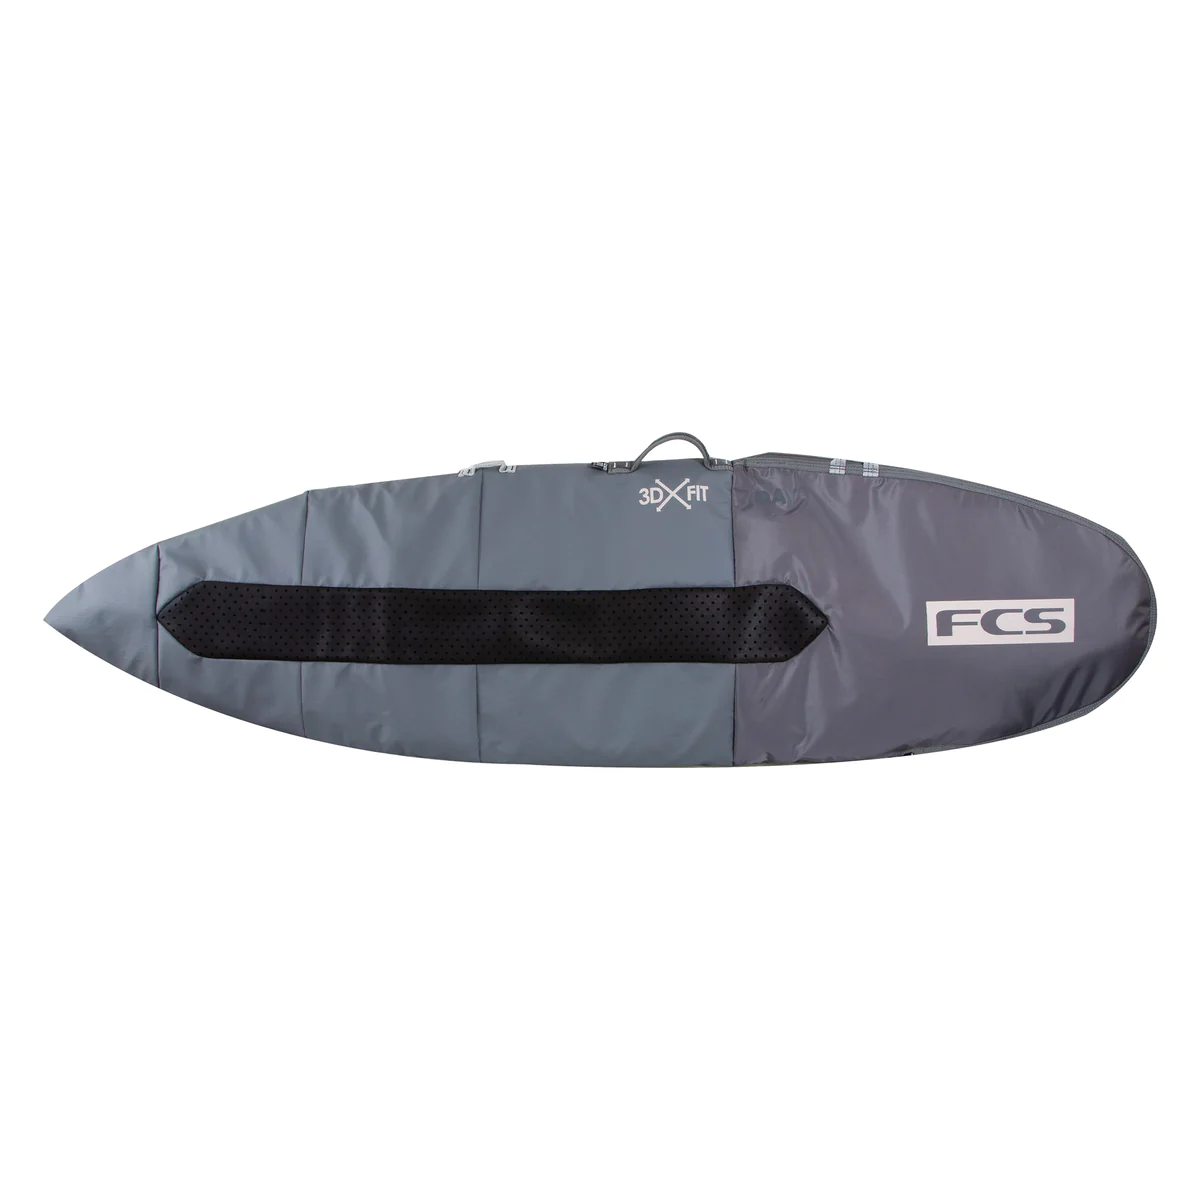 FCS Day All Purpose 6ft 3 Surf Bag - Steel Grey/Warm Grey